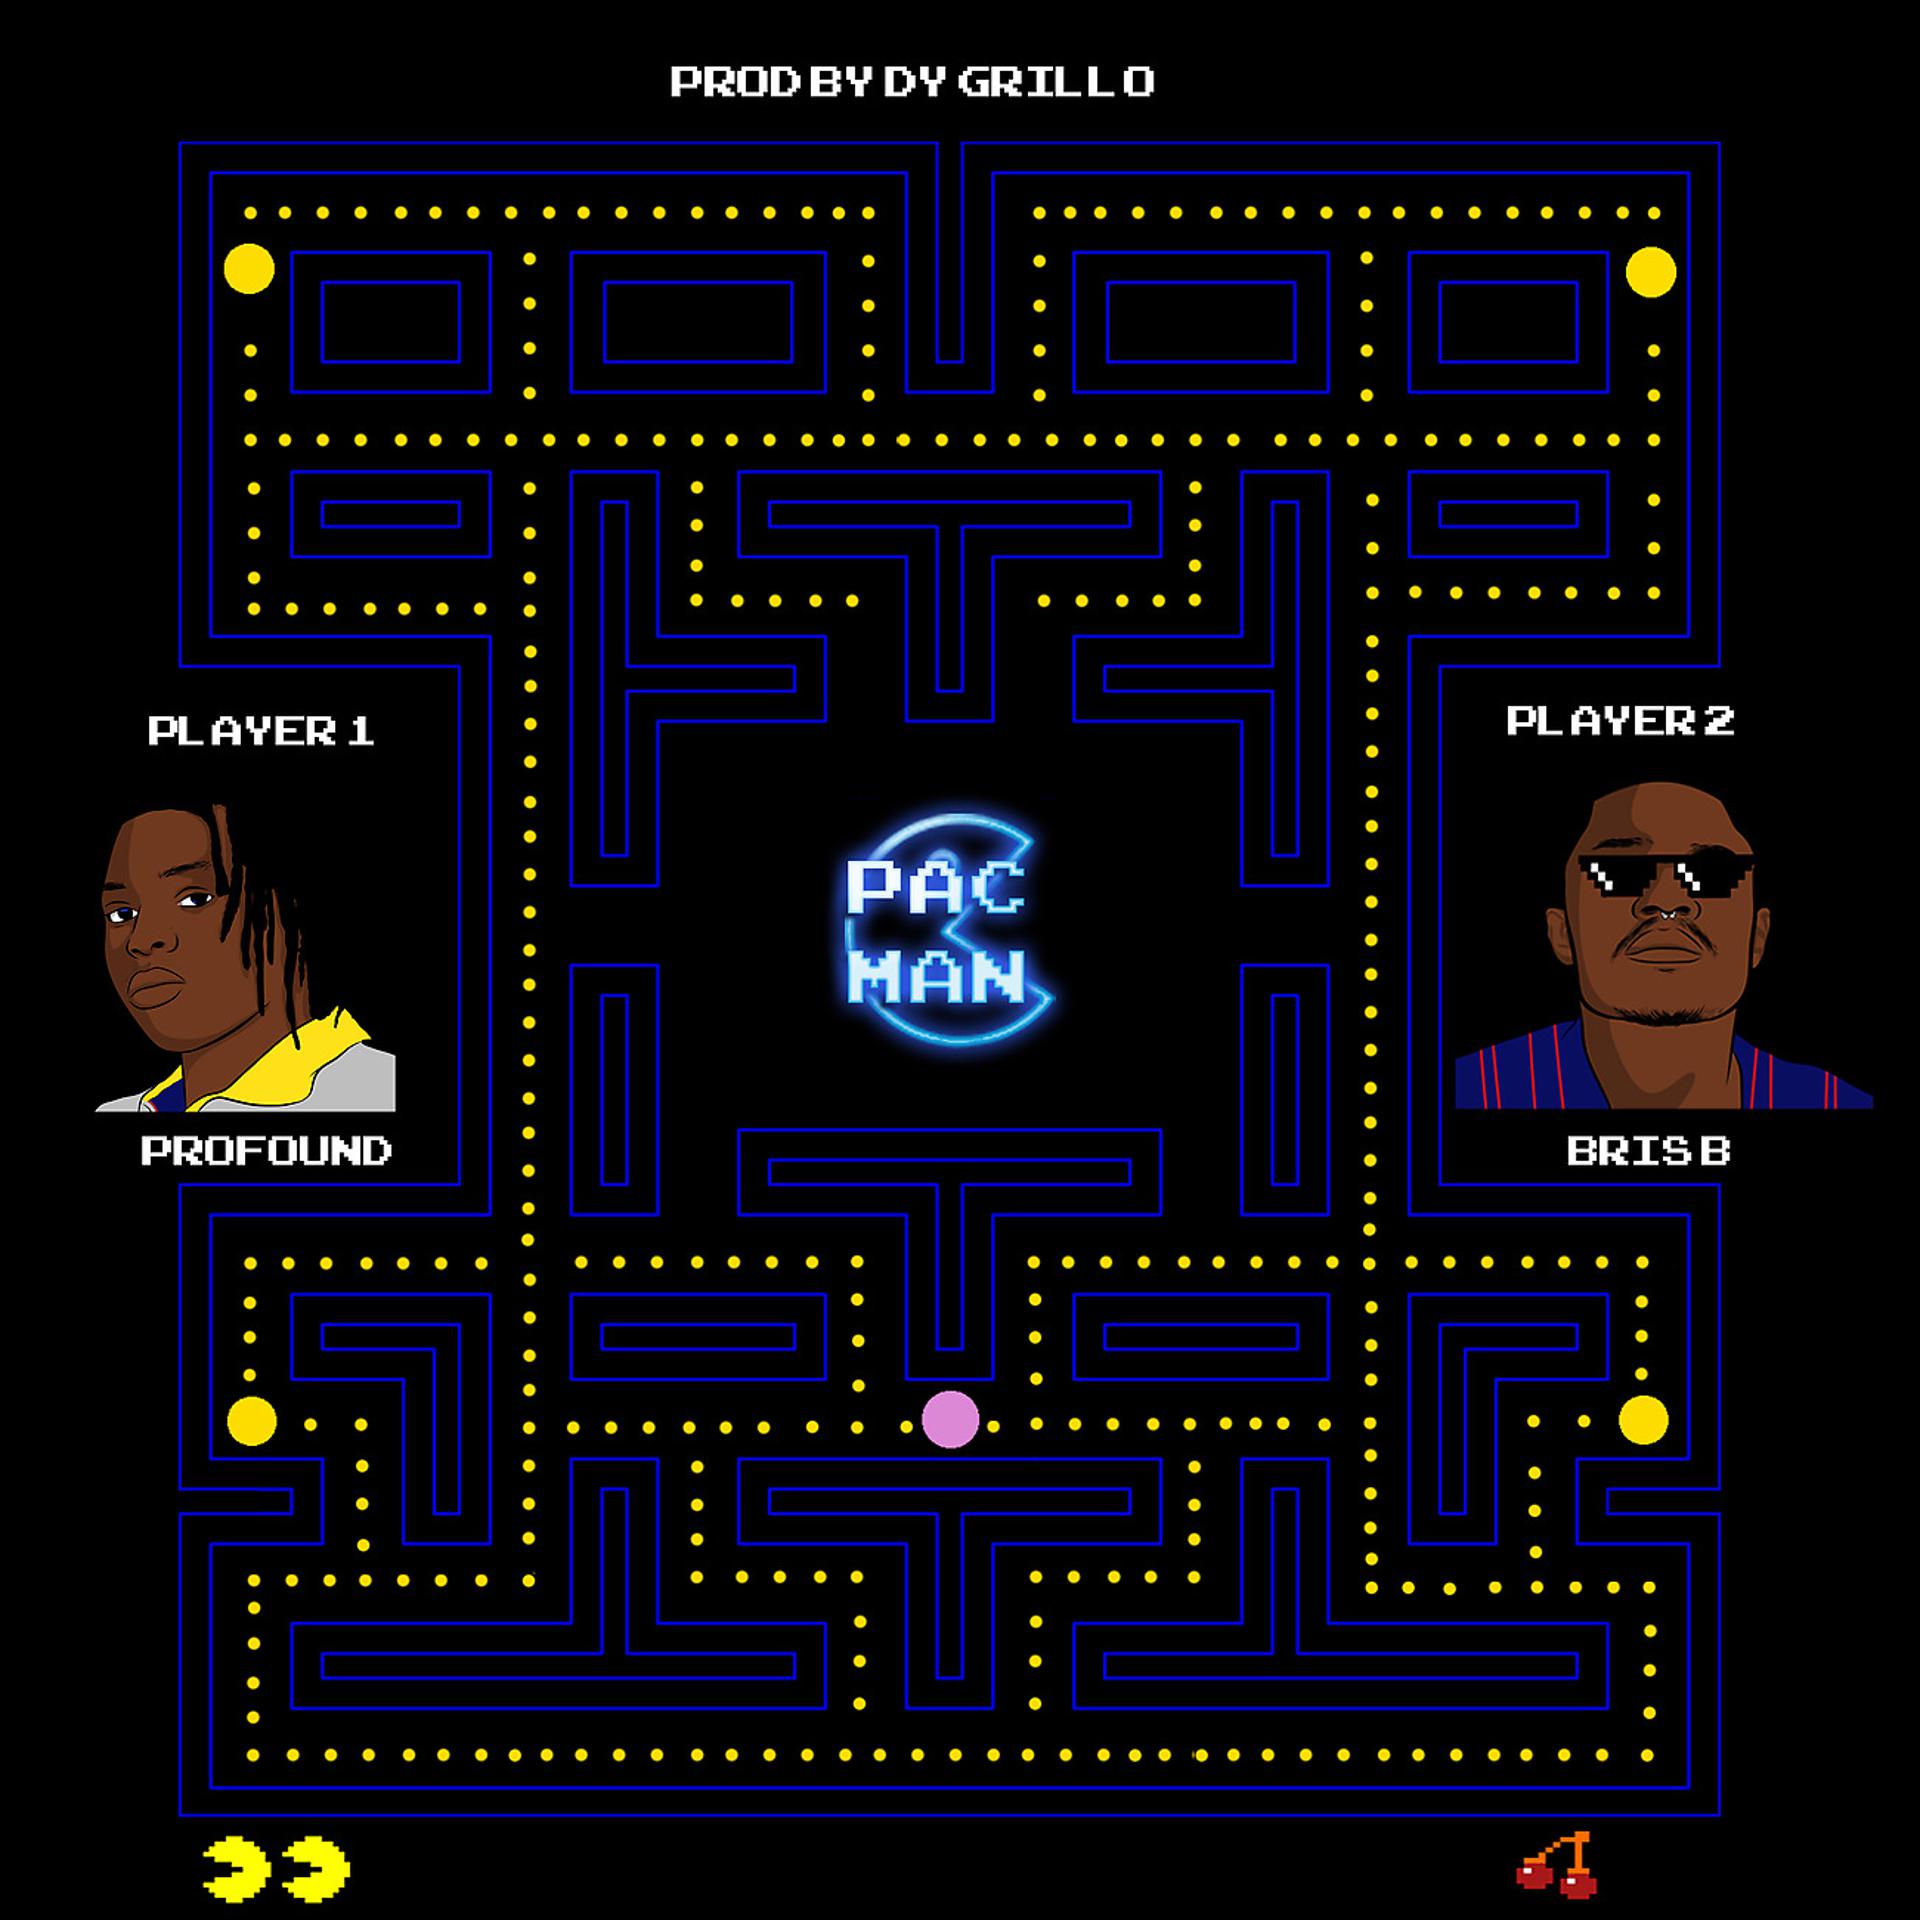 Постер альбома Pacman